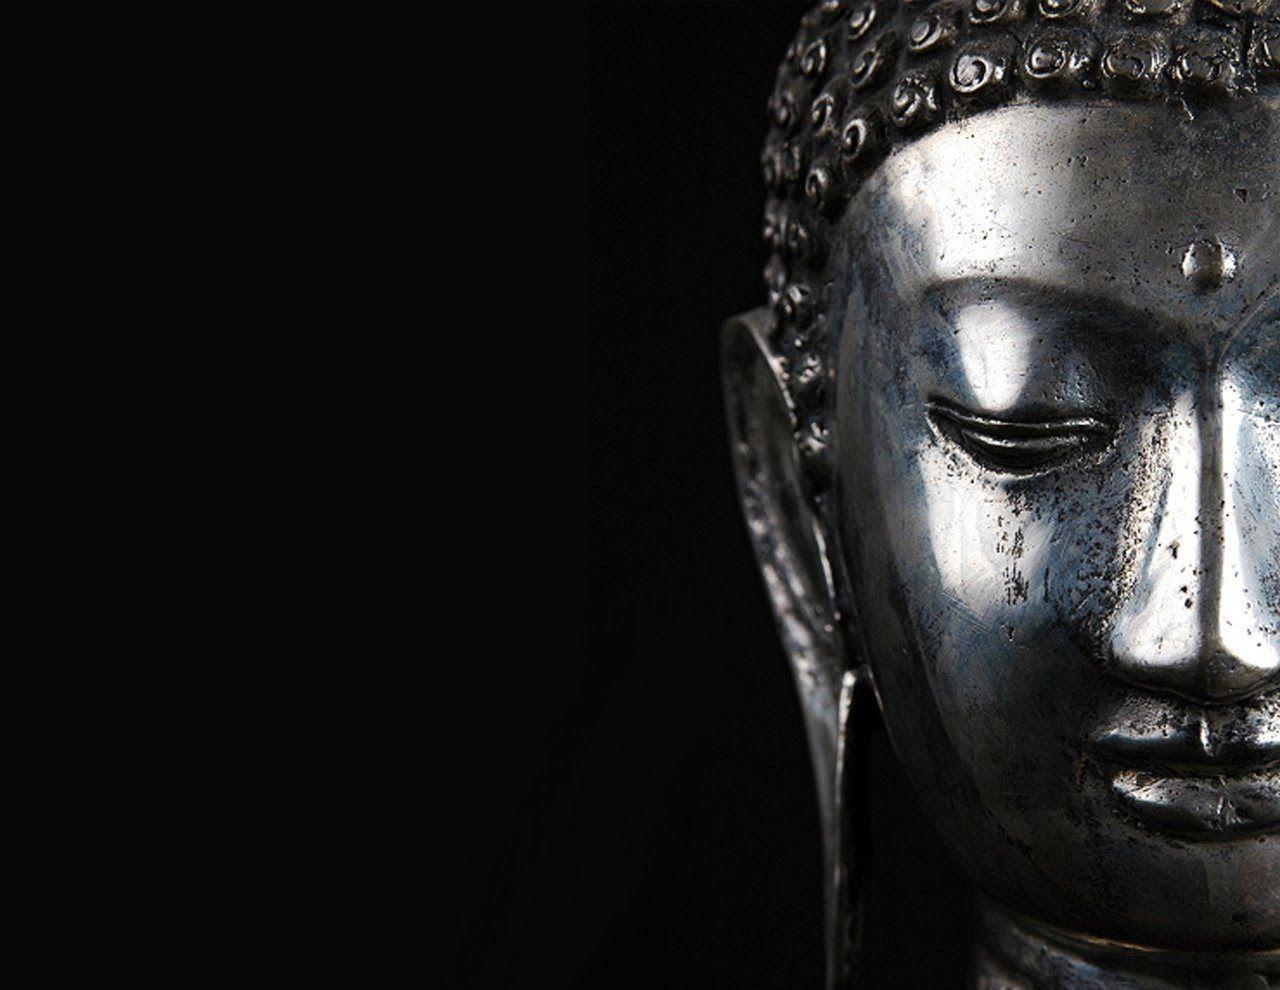  Black Buddha In Hand HD Wallpaper Download  MyGodImages